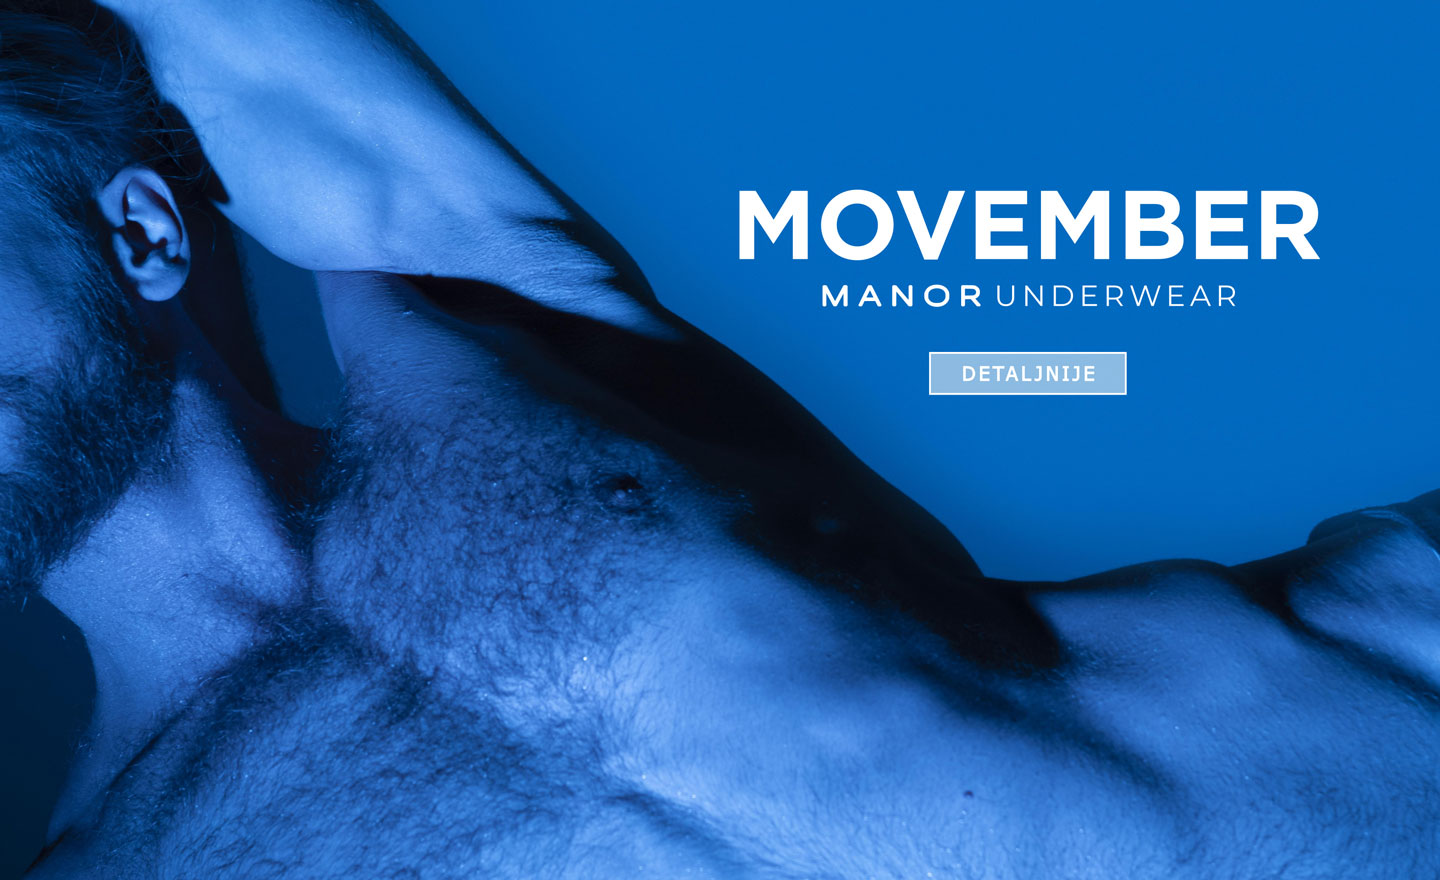 Manor underwear Movember